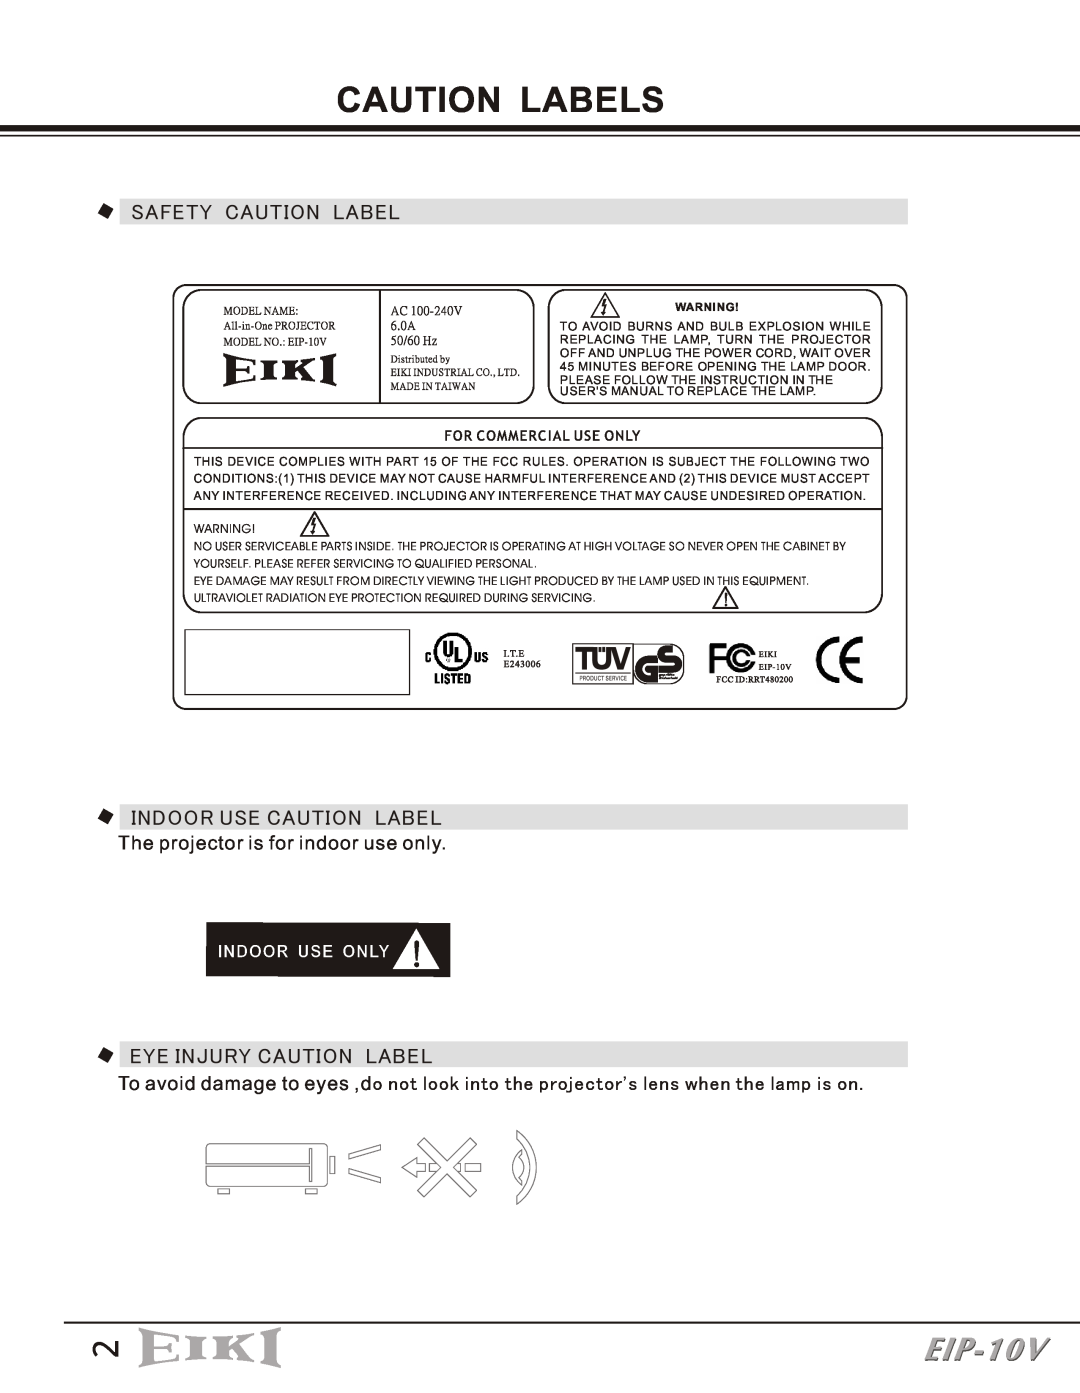 Eiki EIP-10V owner manual Caution Labels, Safety Caution Label, Indoor Use Caution Label, Eye Injury Caution Label 